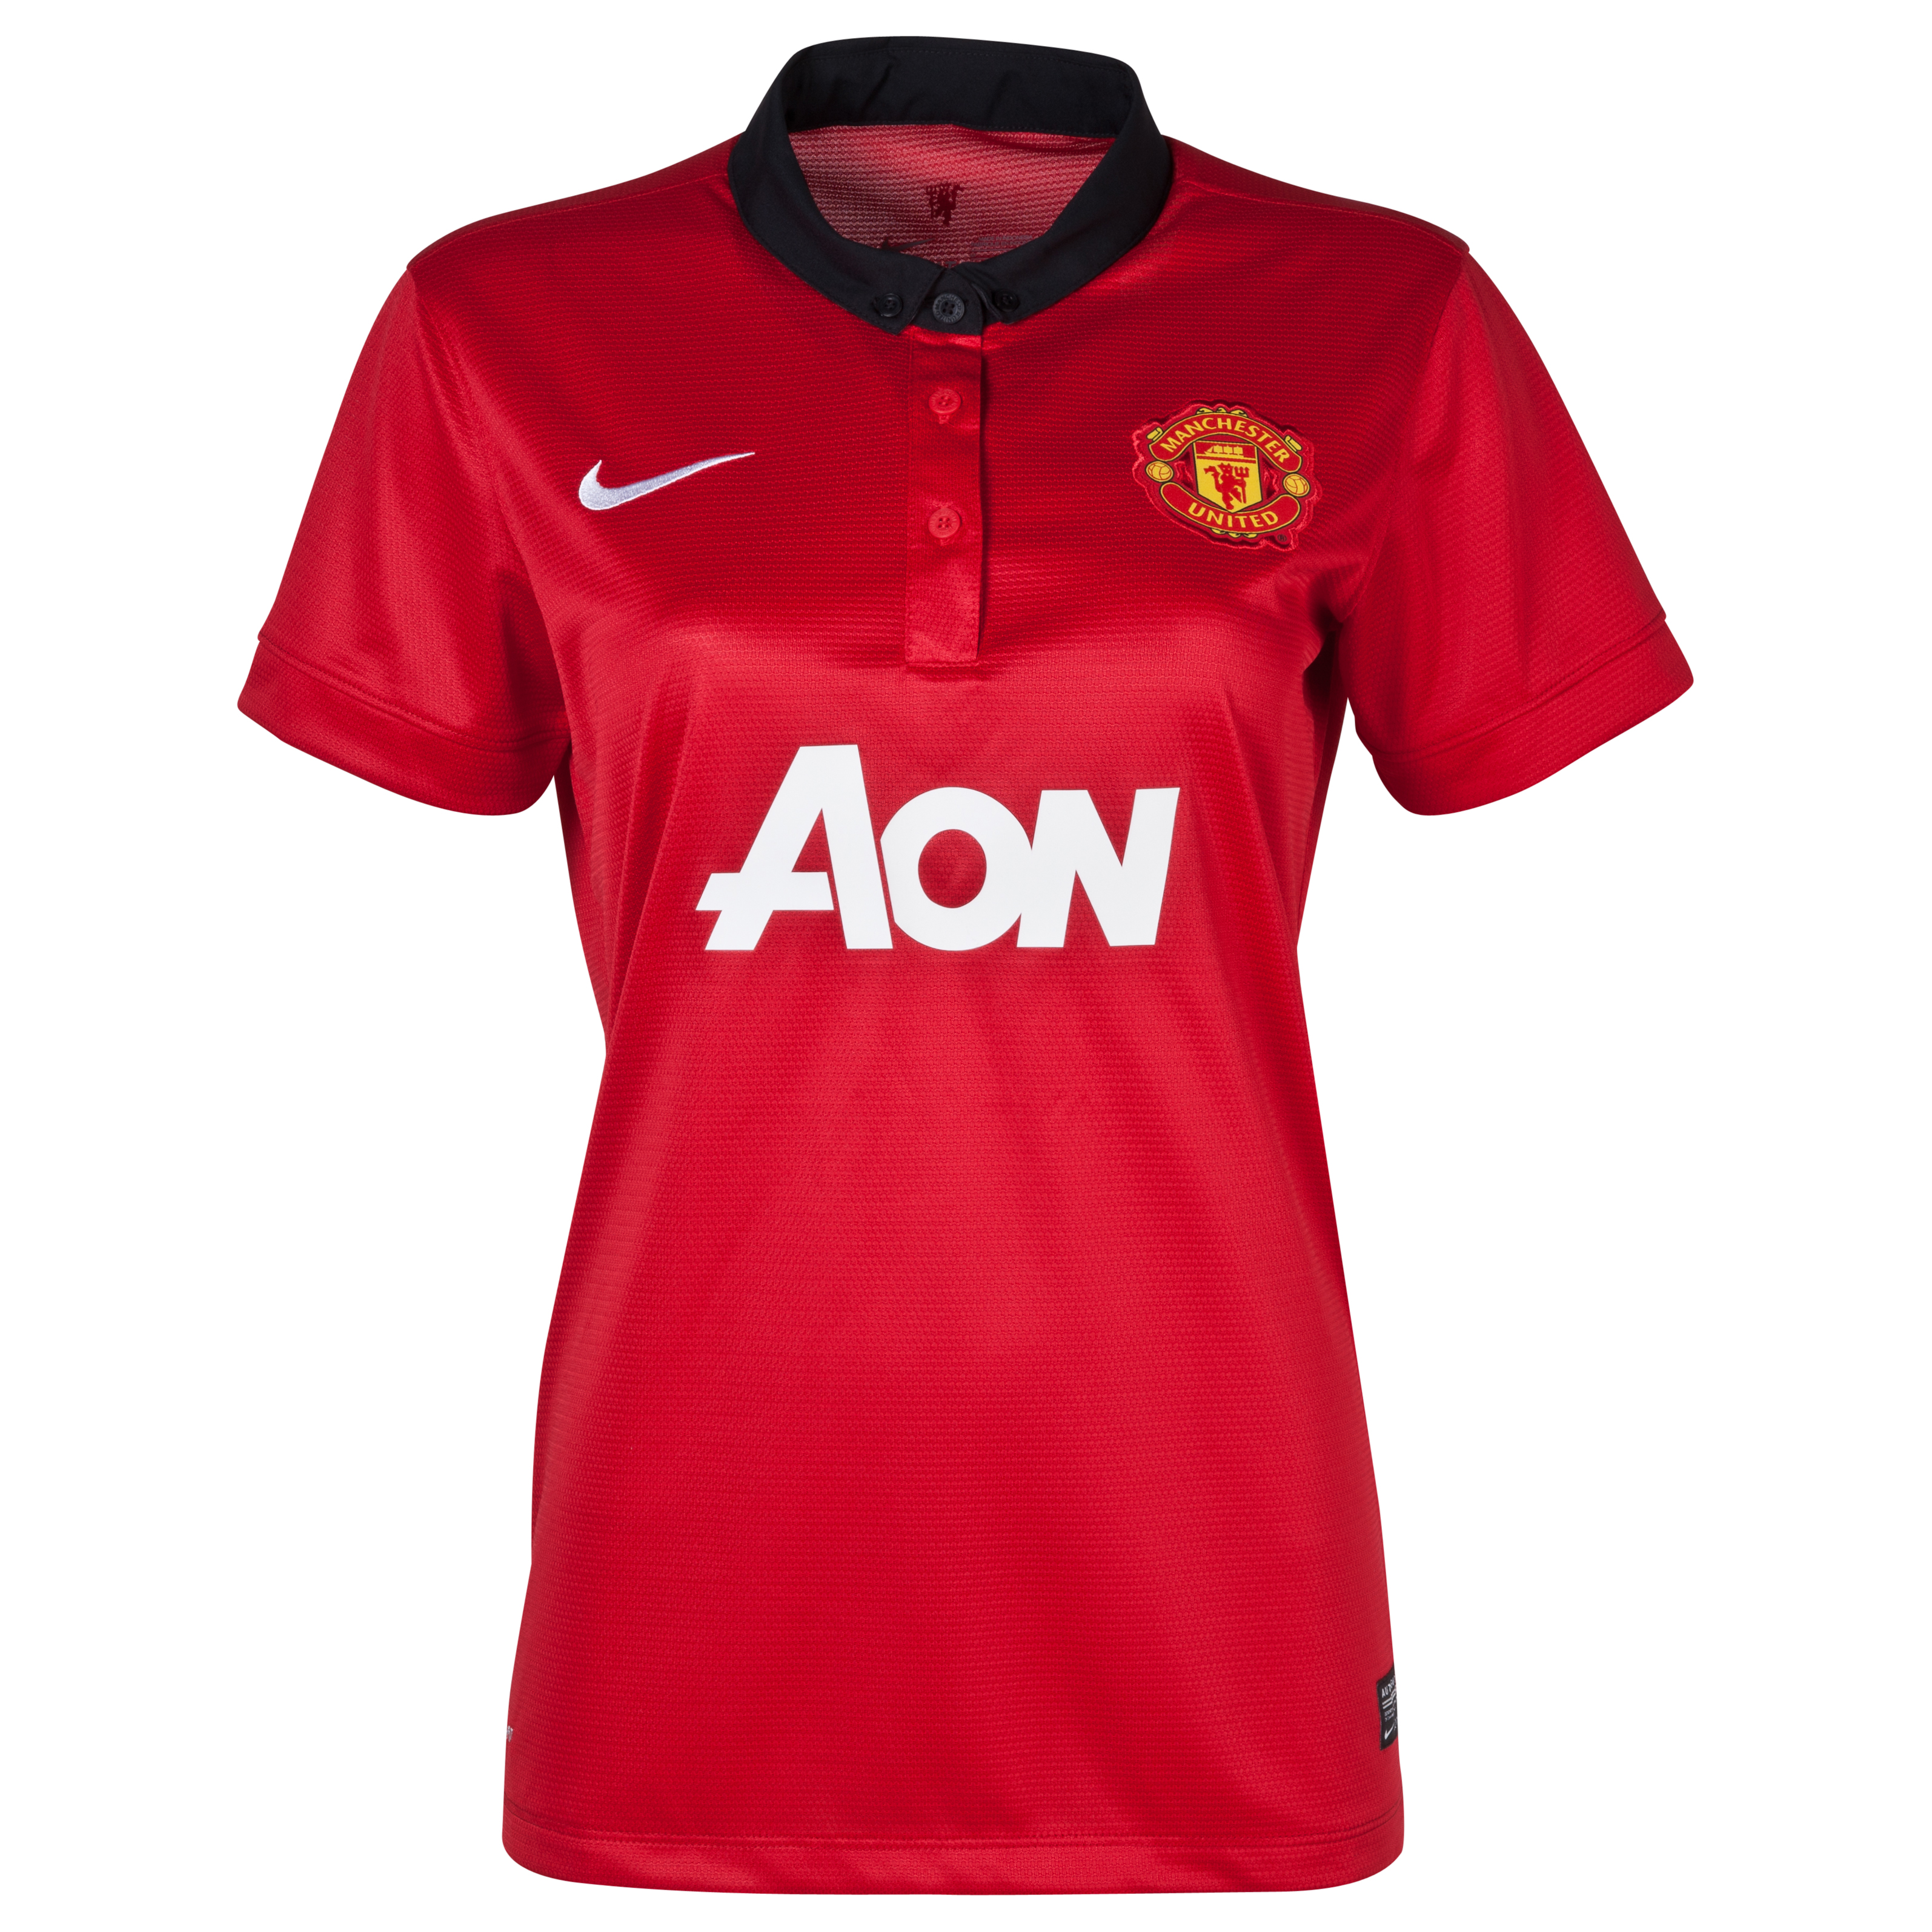 Manchester United Home Shirt 2013/14 - Womens